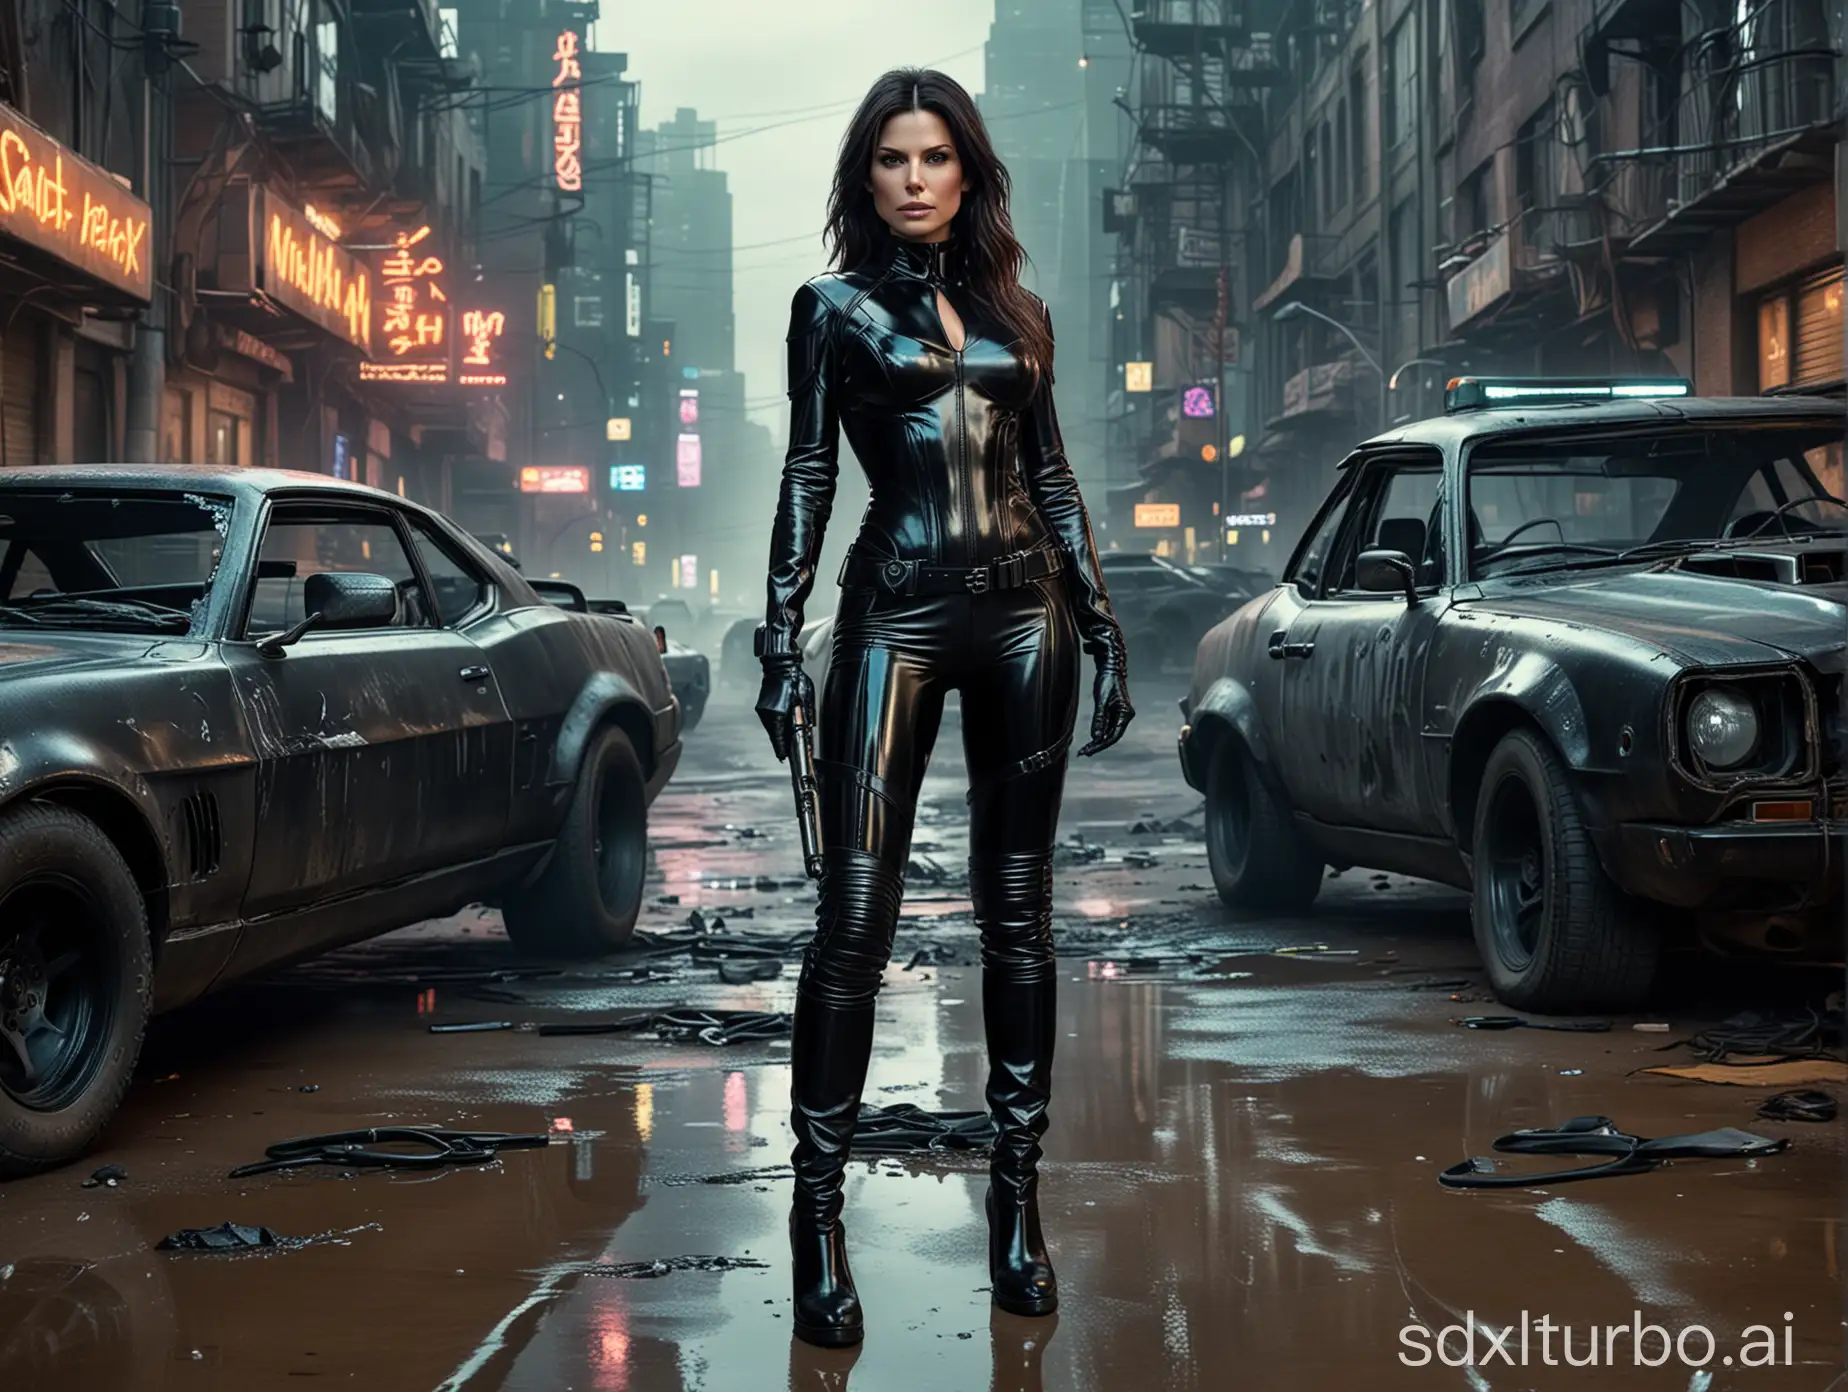 Cyberpunk-Police-Officer-Sandra-Bullock-in-Shiny-PVC-Suit-Amidst-Urban-Destruction